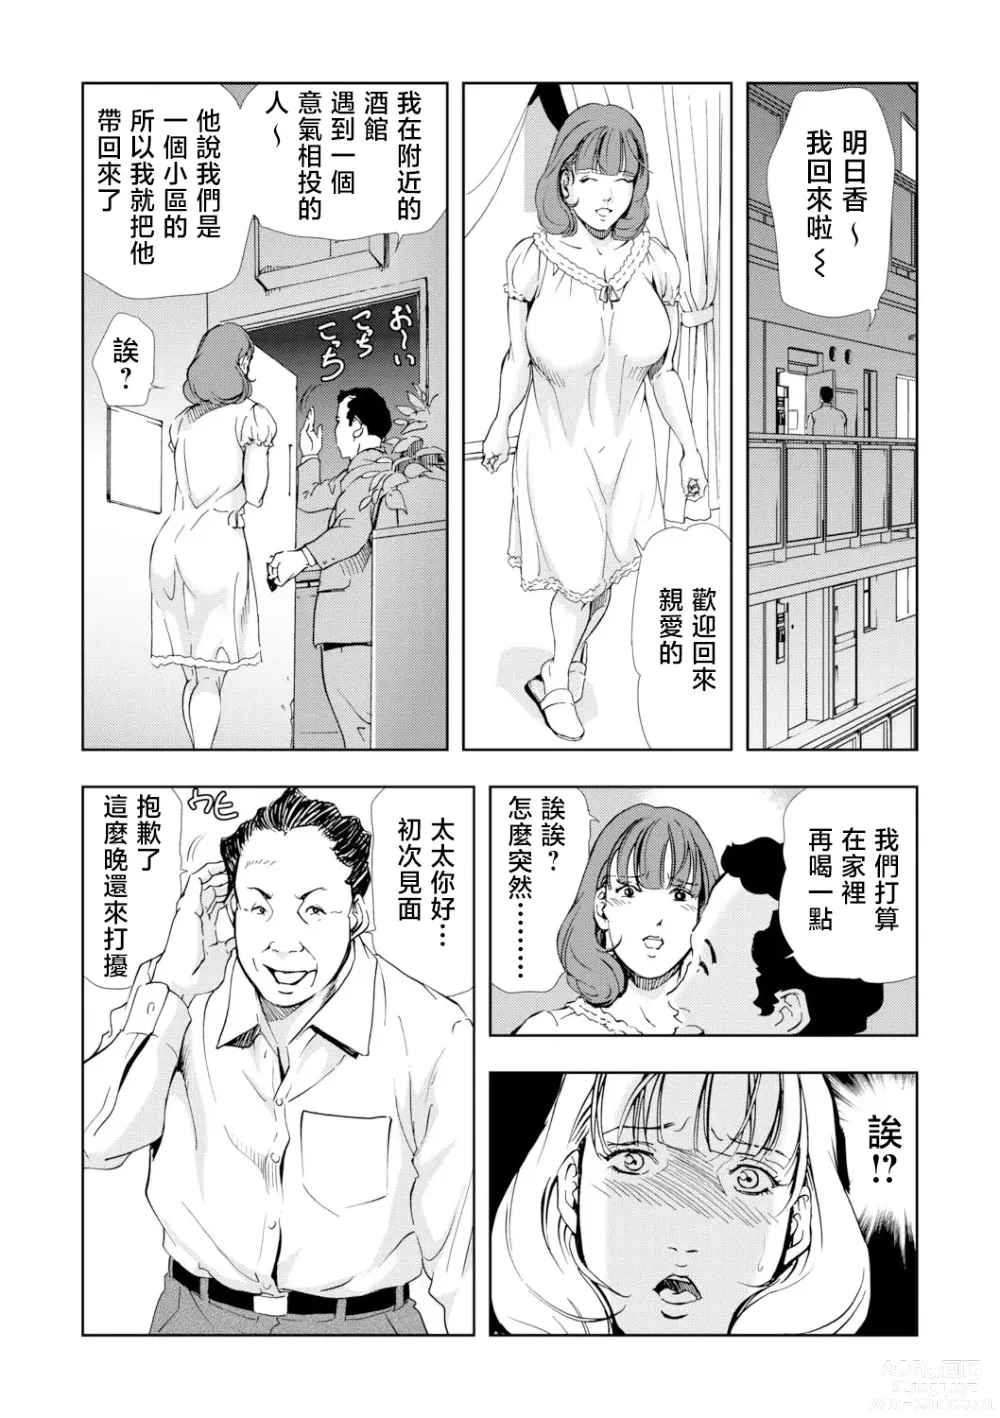 Page 16 of manga Netorare Vol.03